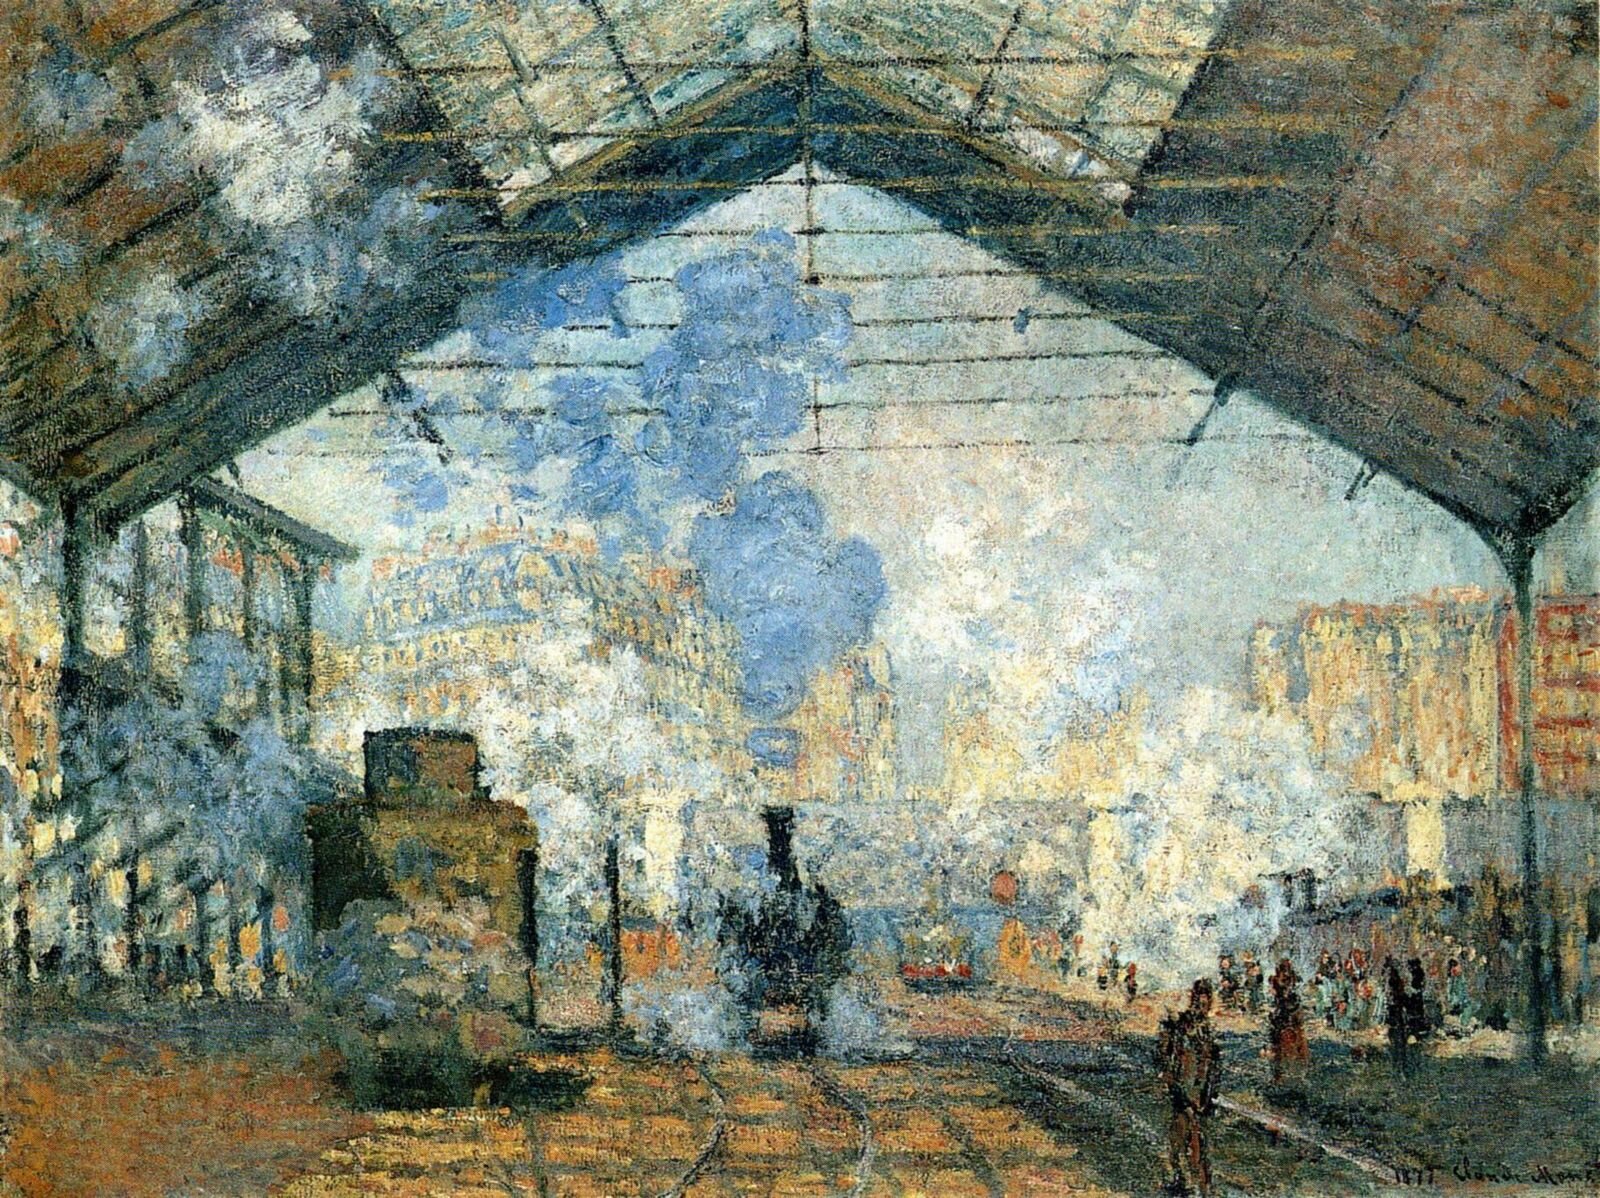 Claude Monet, Gare Saint-Lazare, 1877